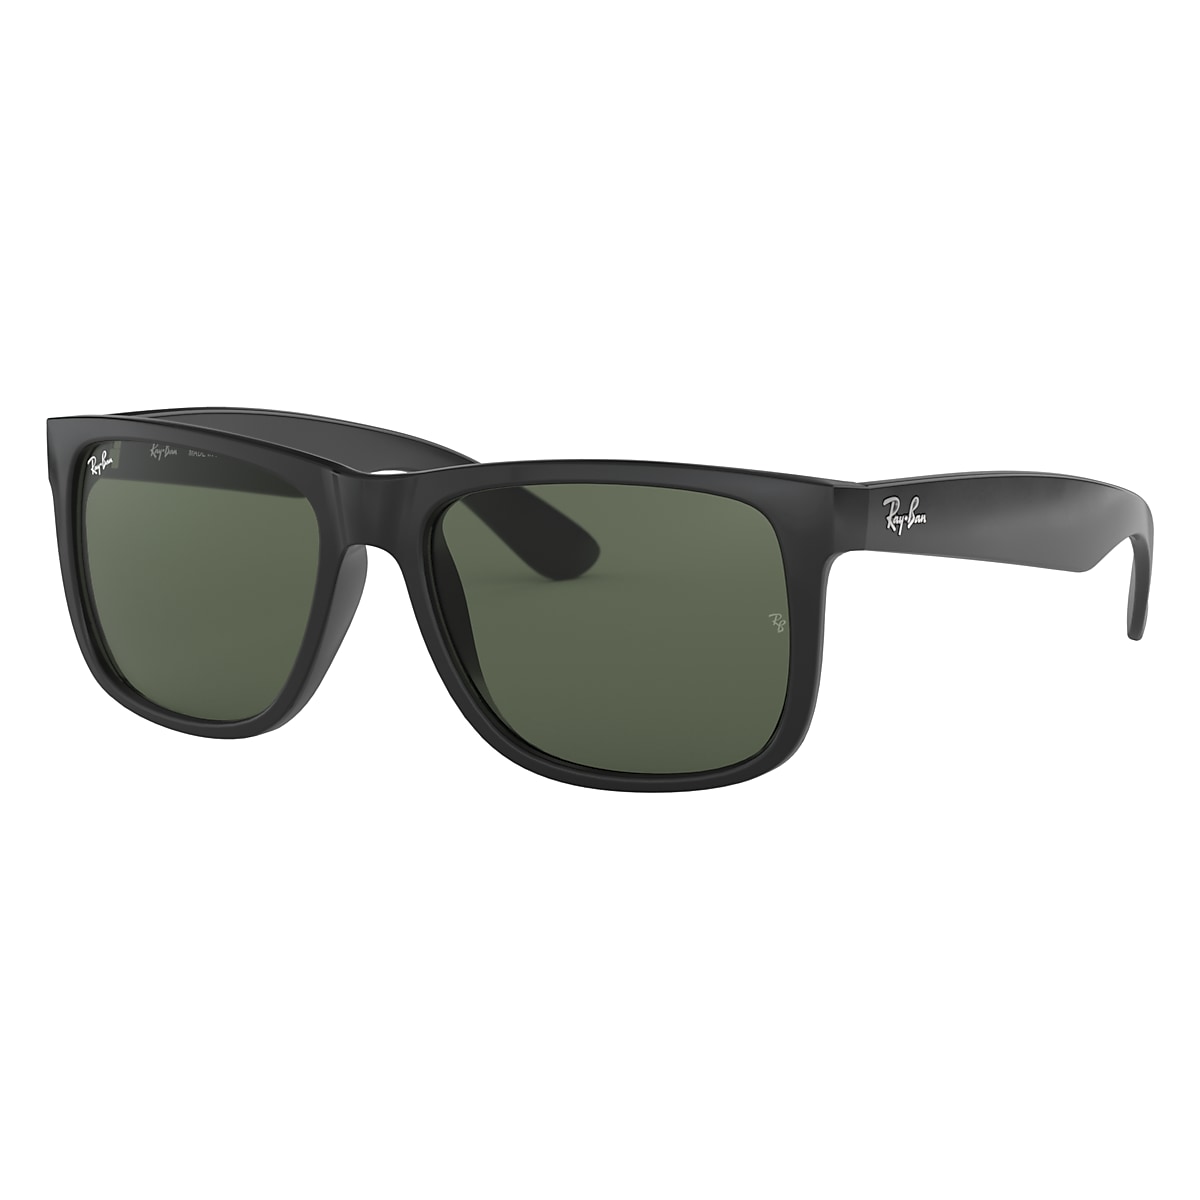 JUSTIN CLASSIC Sunglasses in Black Dark Green - RB4165 | Ray-Ban® US